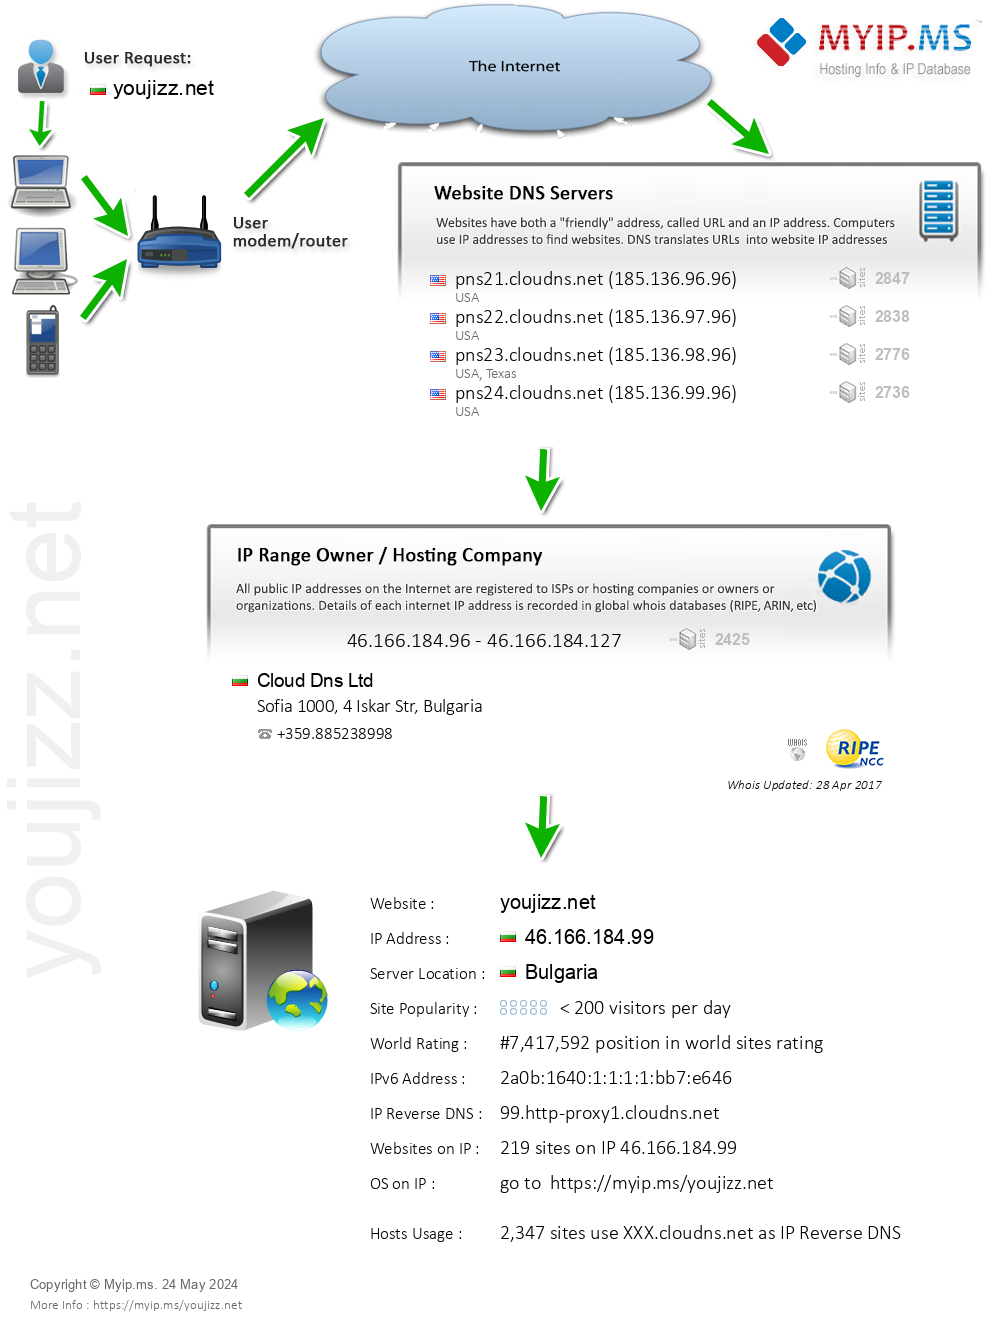 Youjizz.net - Website Hosting Visual IP Diagram